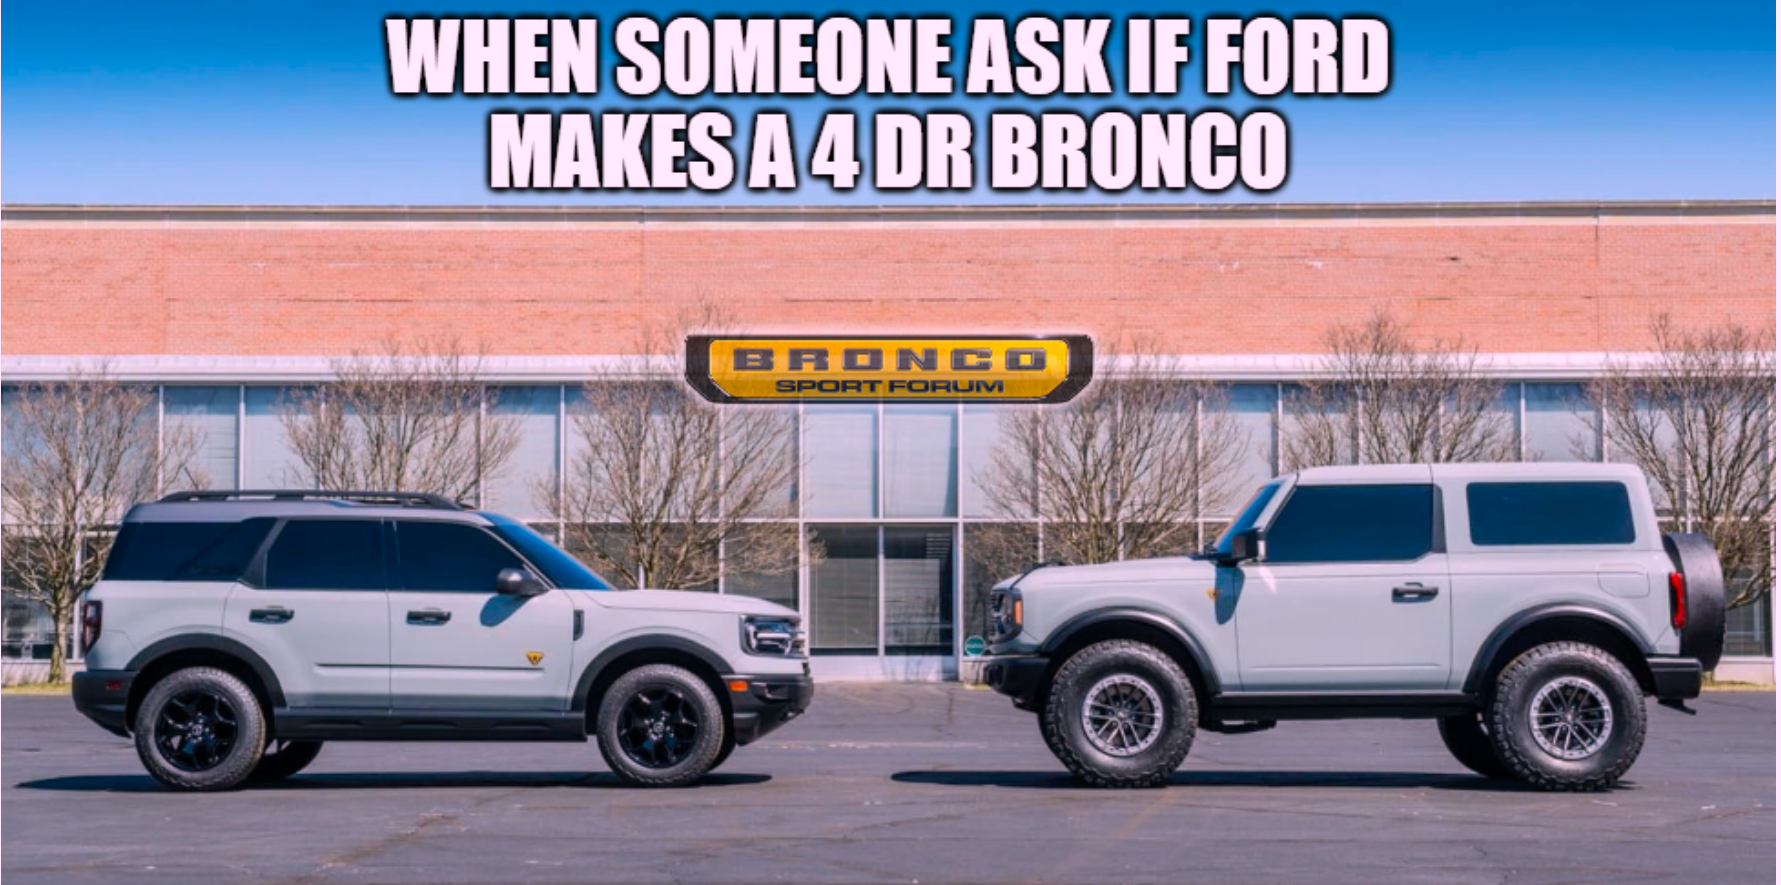 Ford Bronco 2dr vs 4dr 4dr Bronco